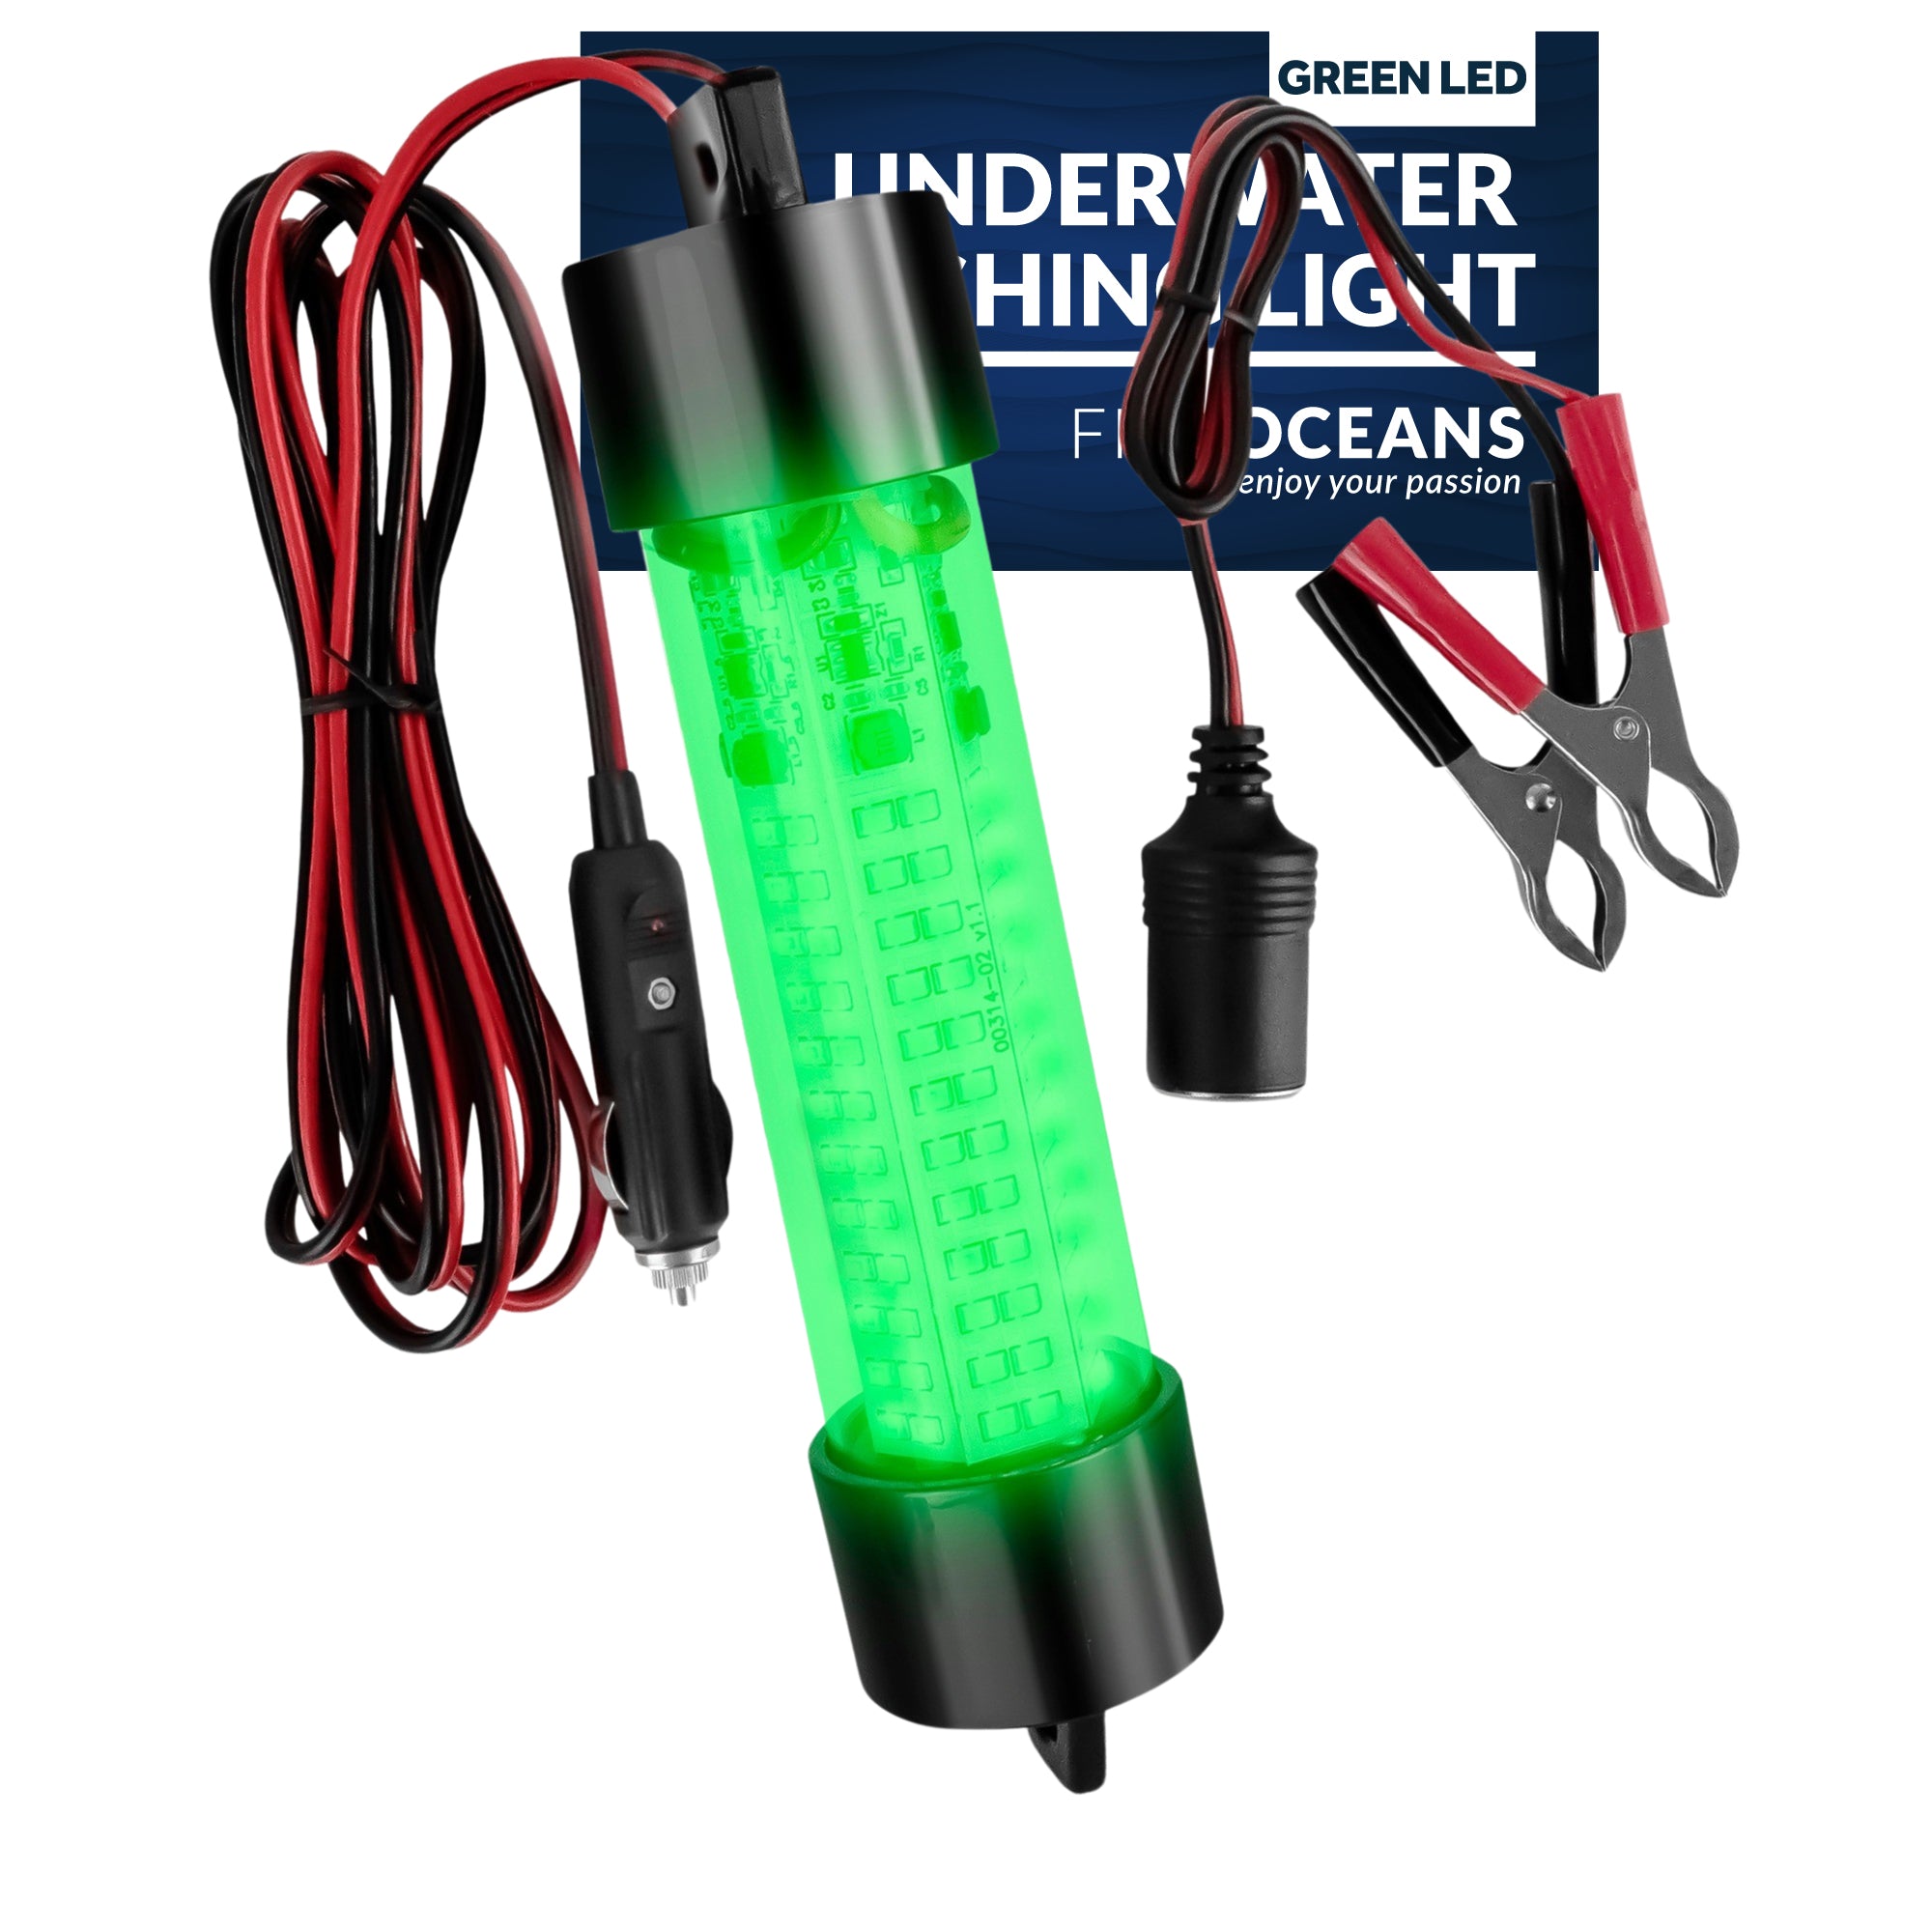 Peahefy Lure Light,5 pcs LED Underwater Fishing Light Night Lamp